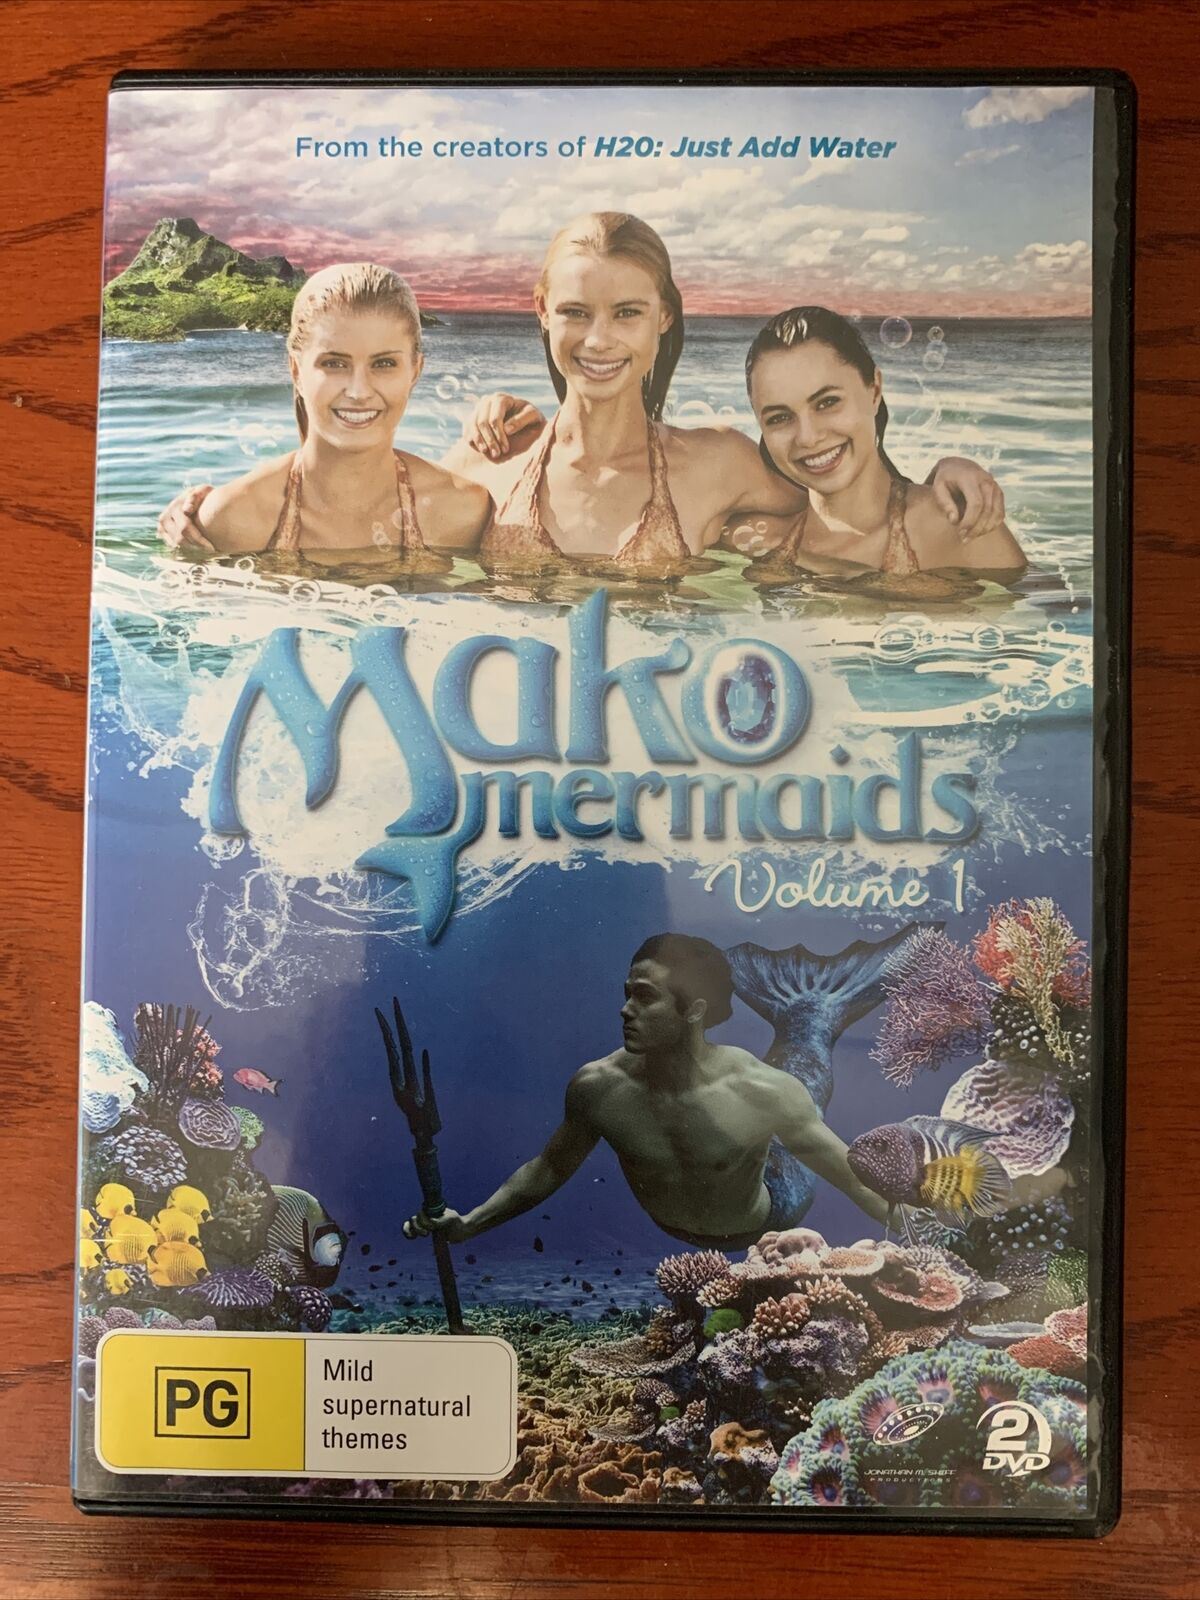 Mako Mermaids : Season 1 (Box Set, DVD, 2013) for sale online